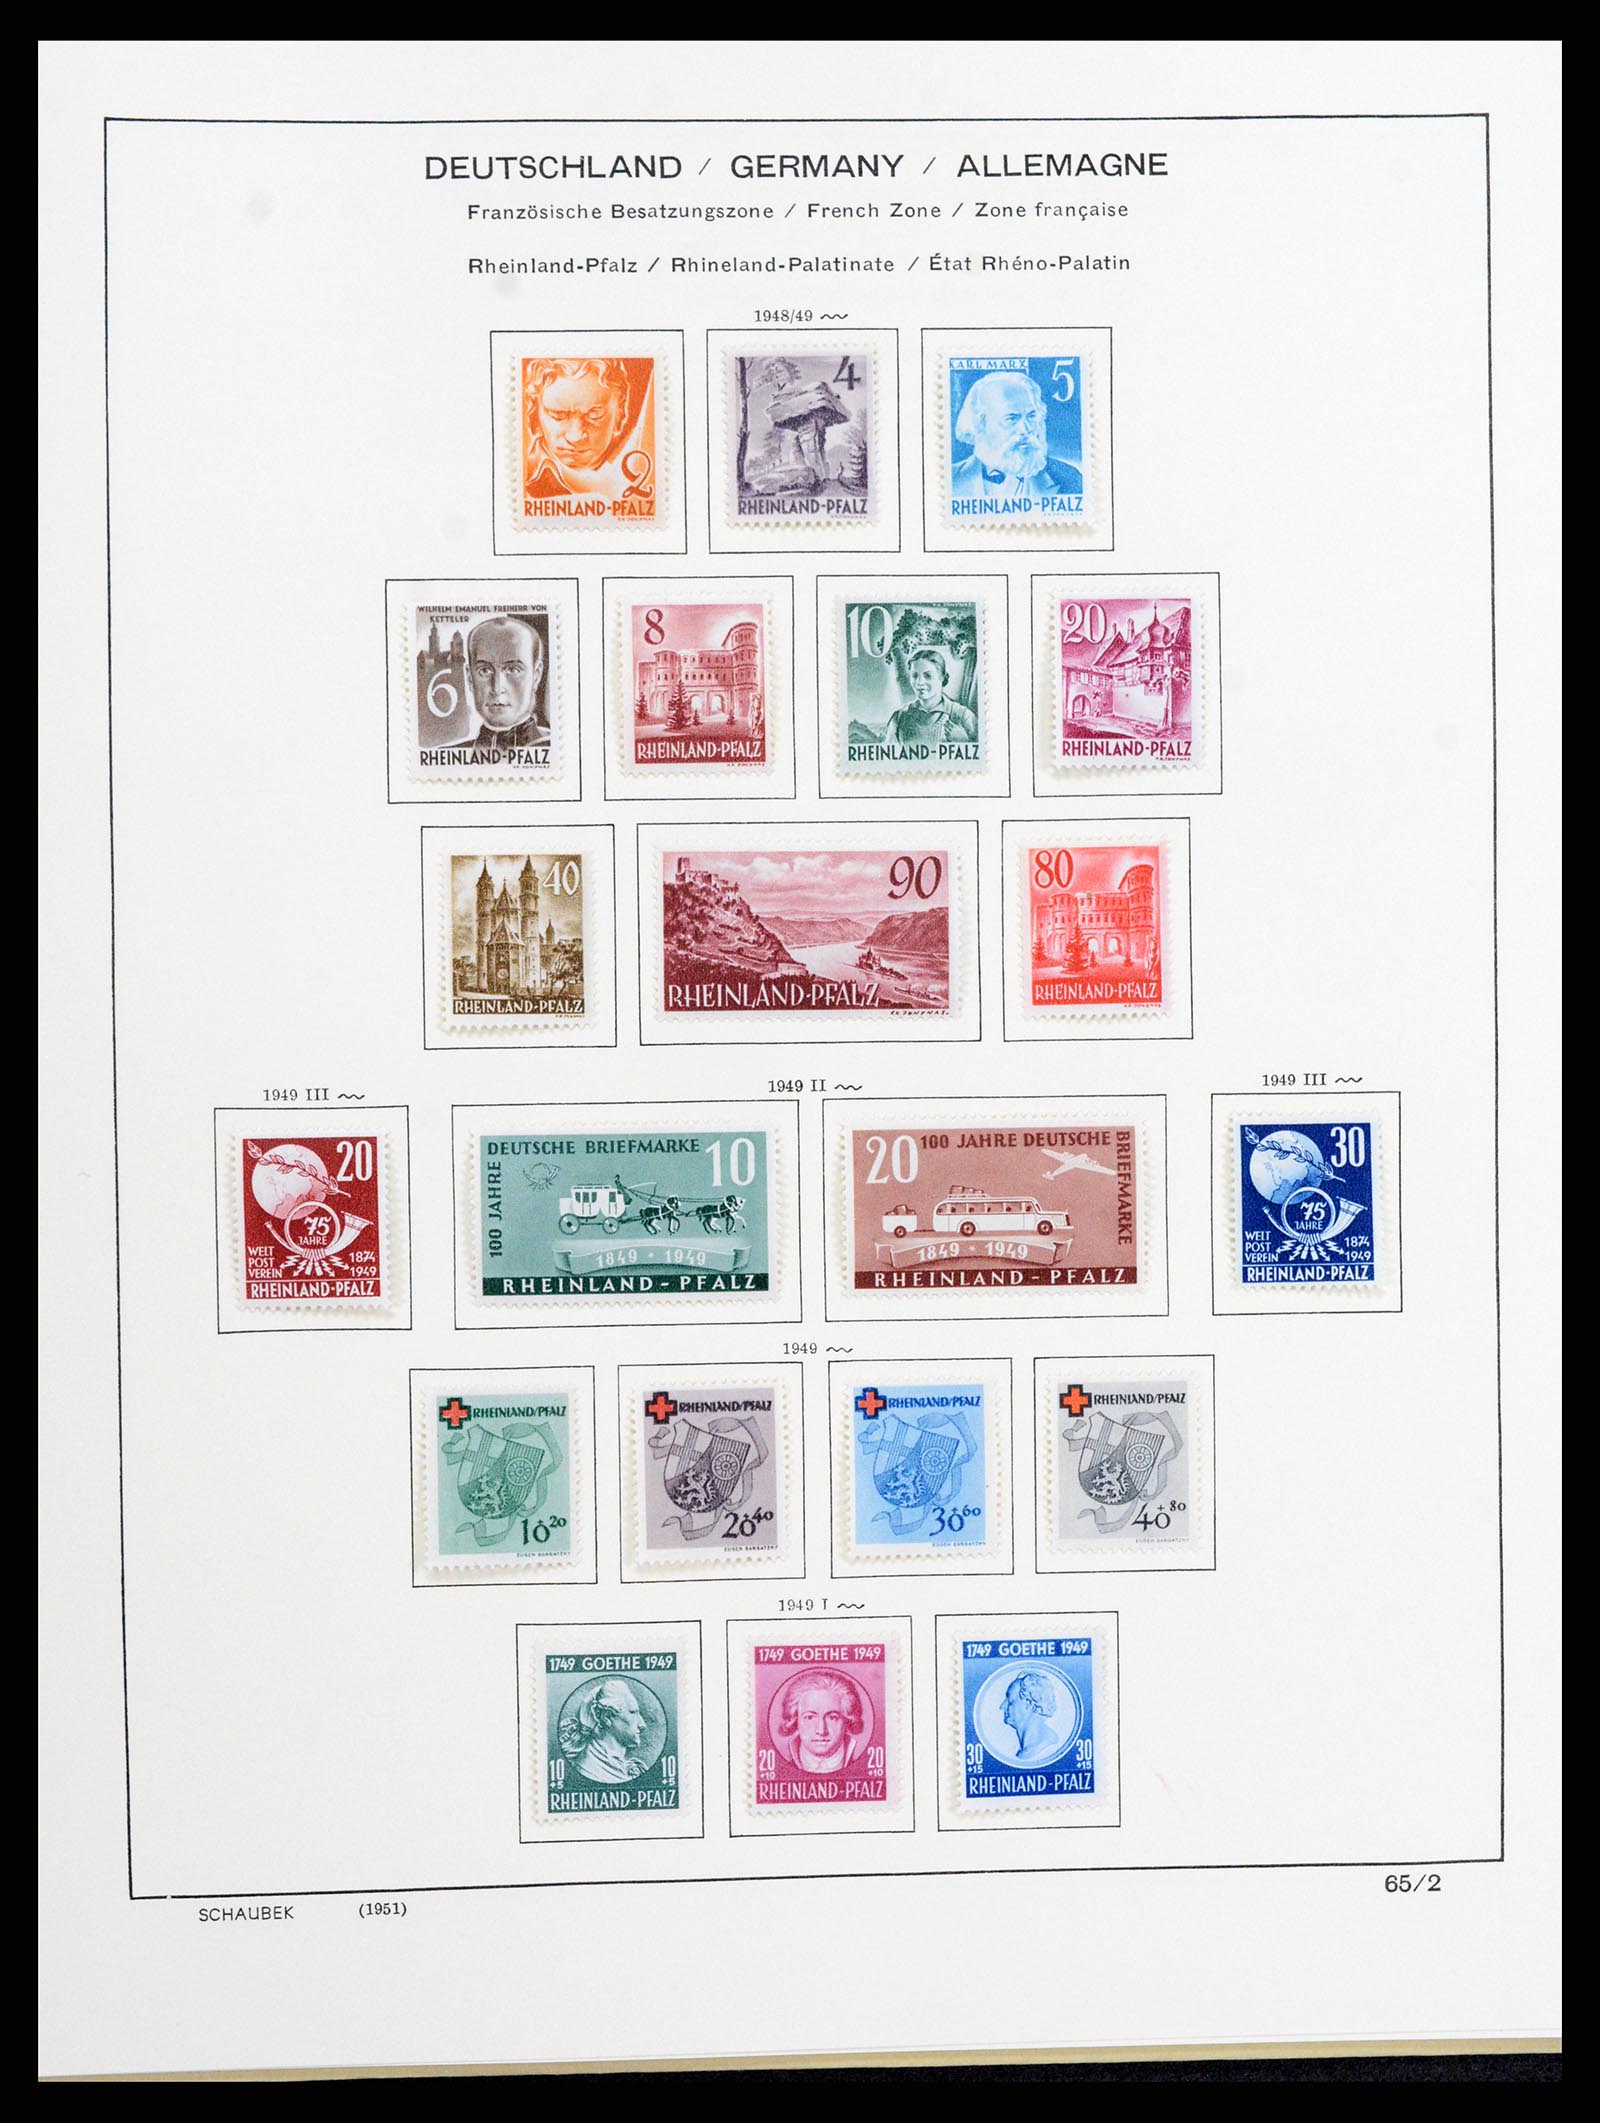 37645 066 - Stamp collection 37645 German Zones 1945-1949.